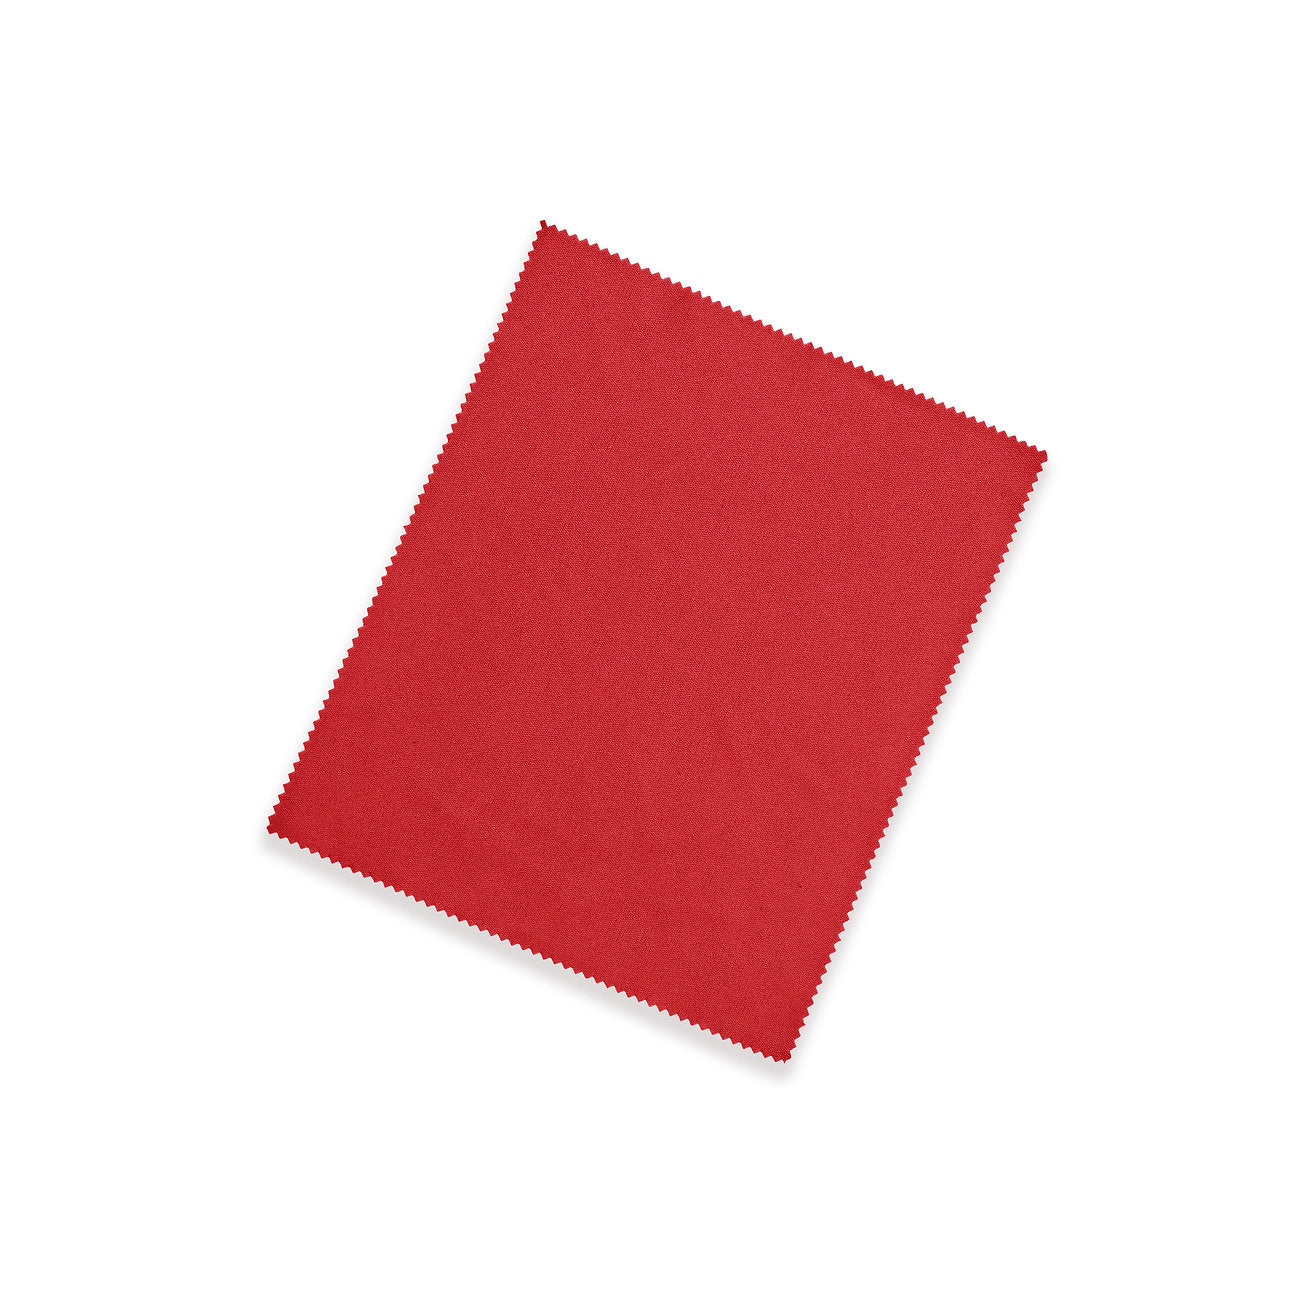 Red microfiber cloth